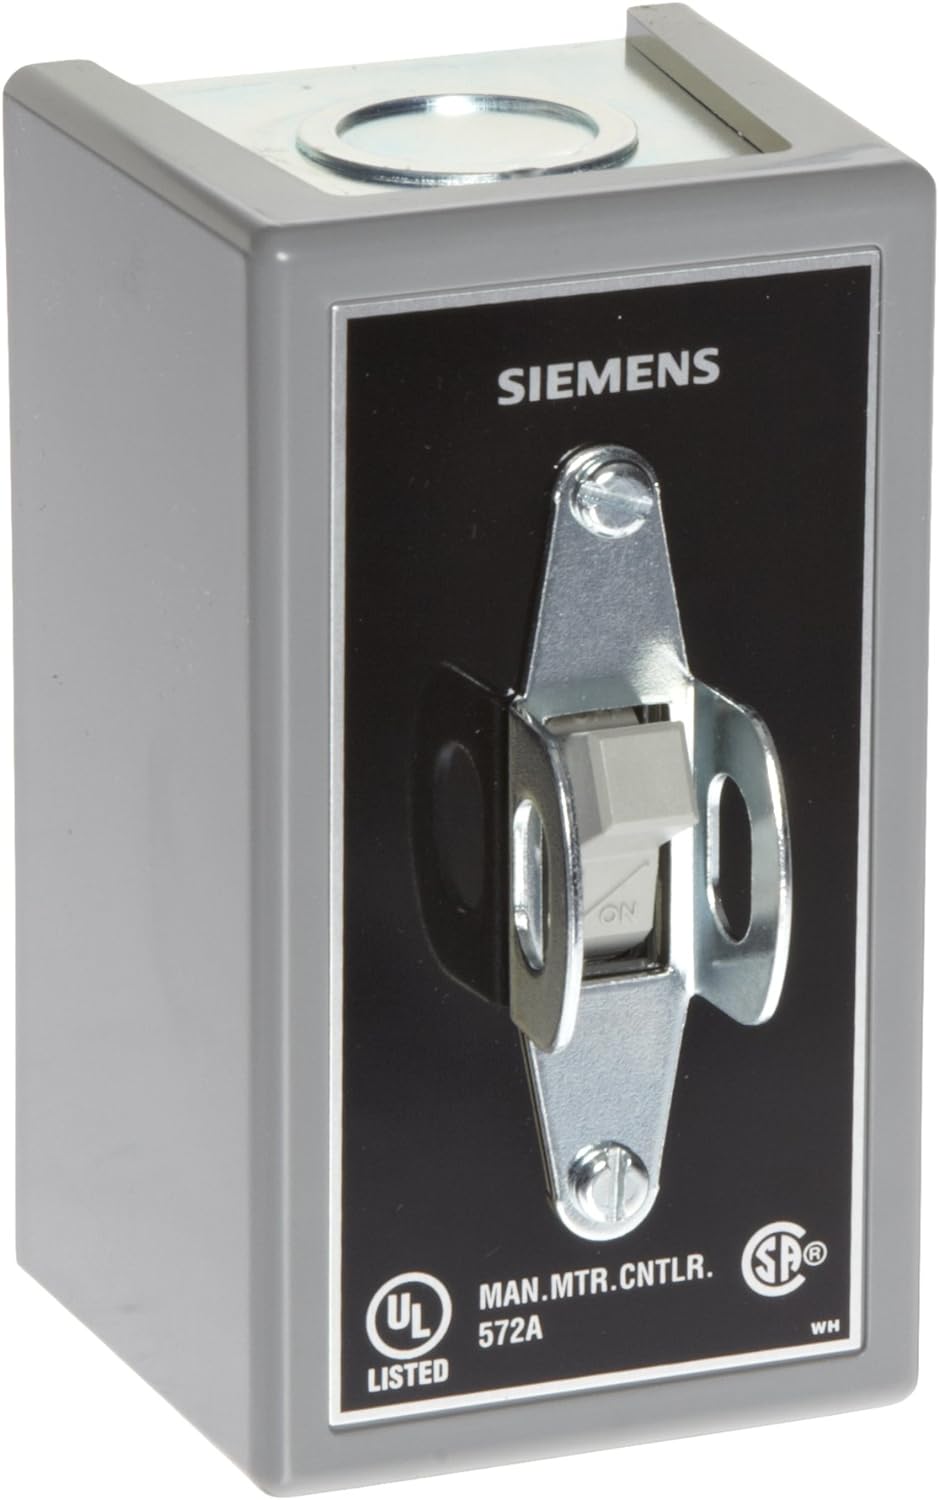 Siemens MMSKG1 Fractional HP Switch